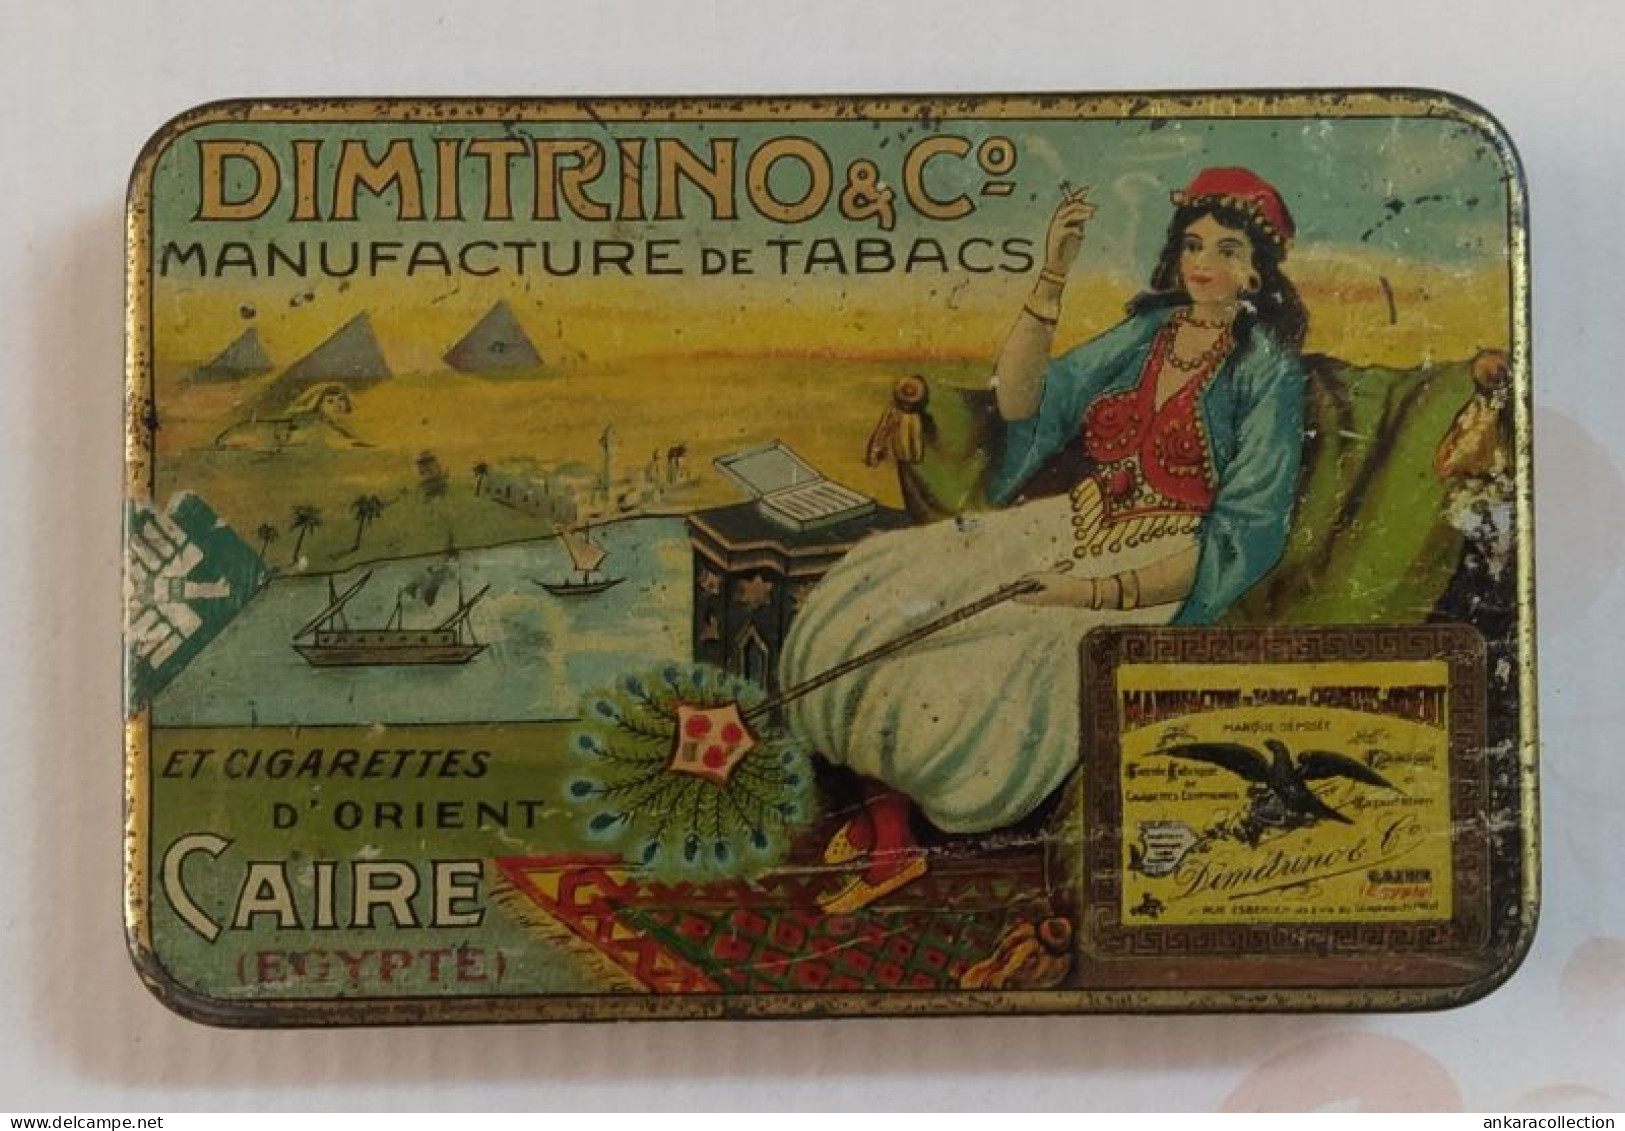 AC - DIMITRINO Co MANUFACTURE DE TABACS CAIRE EGYPTE CIGARETTE - TOBACCO EMPTY VINTAGE TIN BOX - Cajas Para Tabaco (vacios)